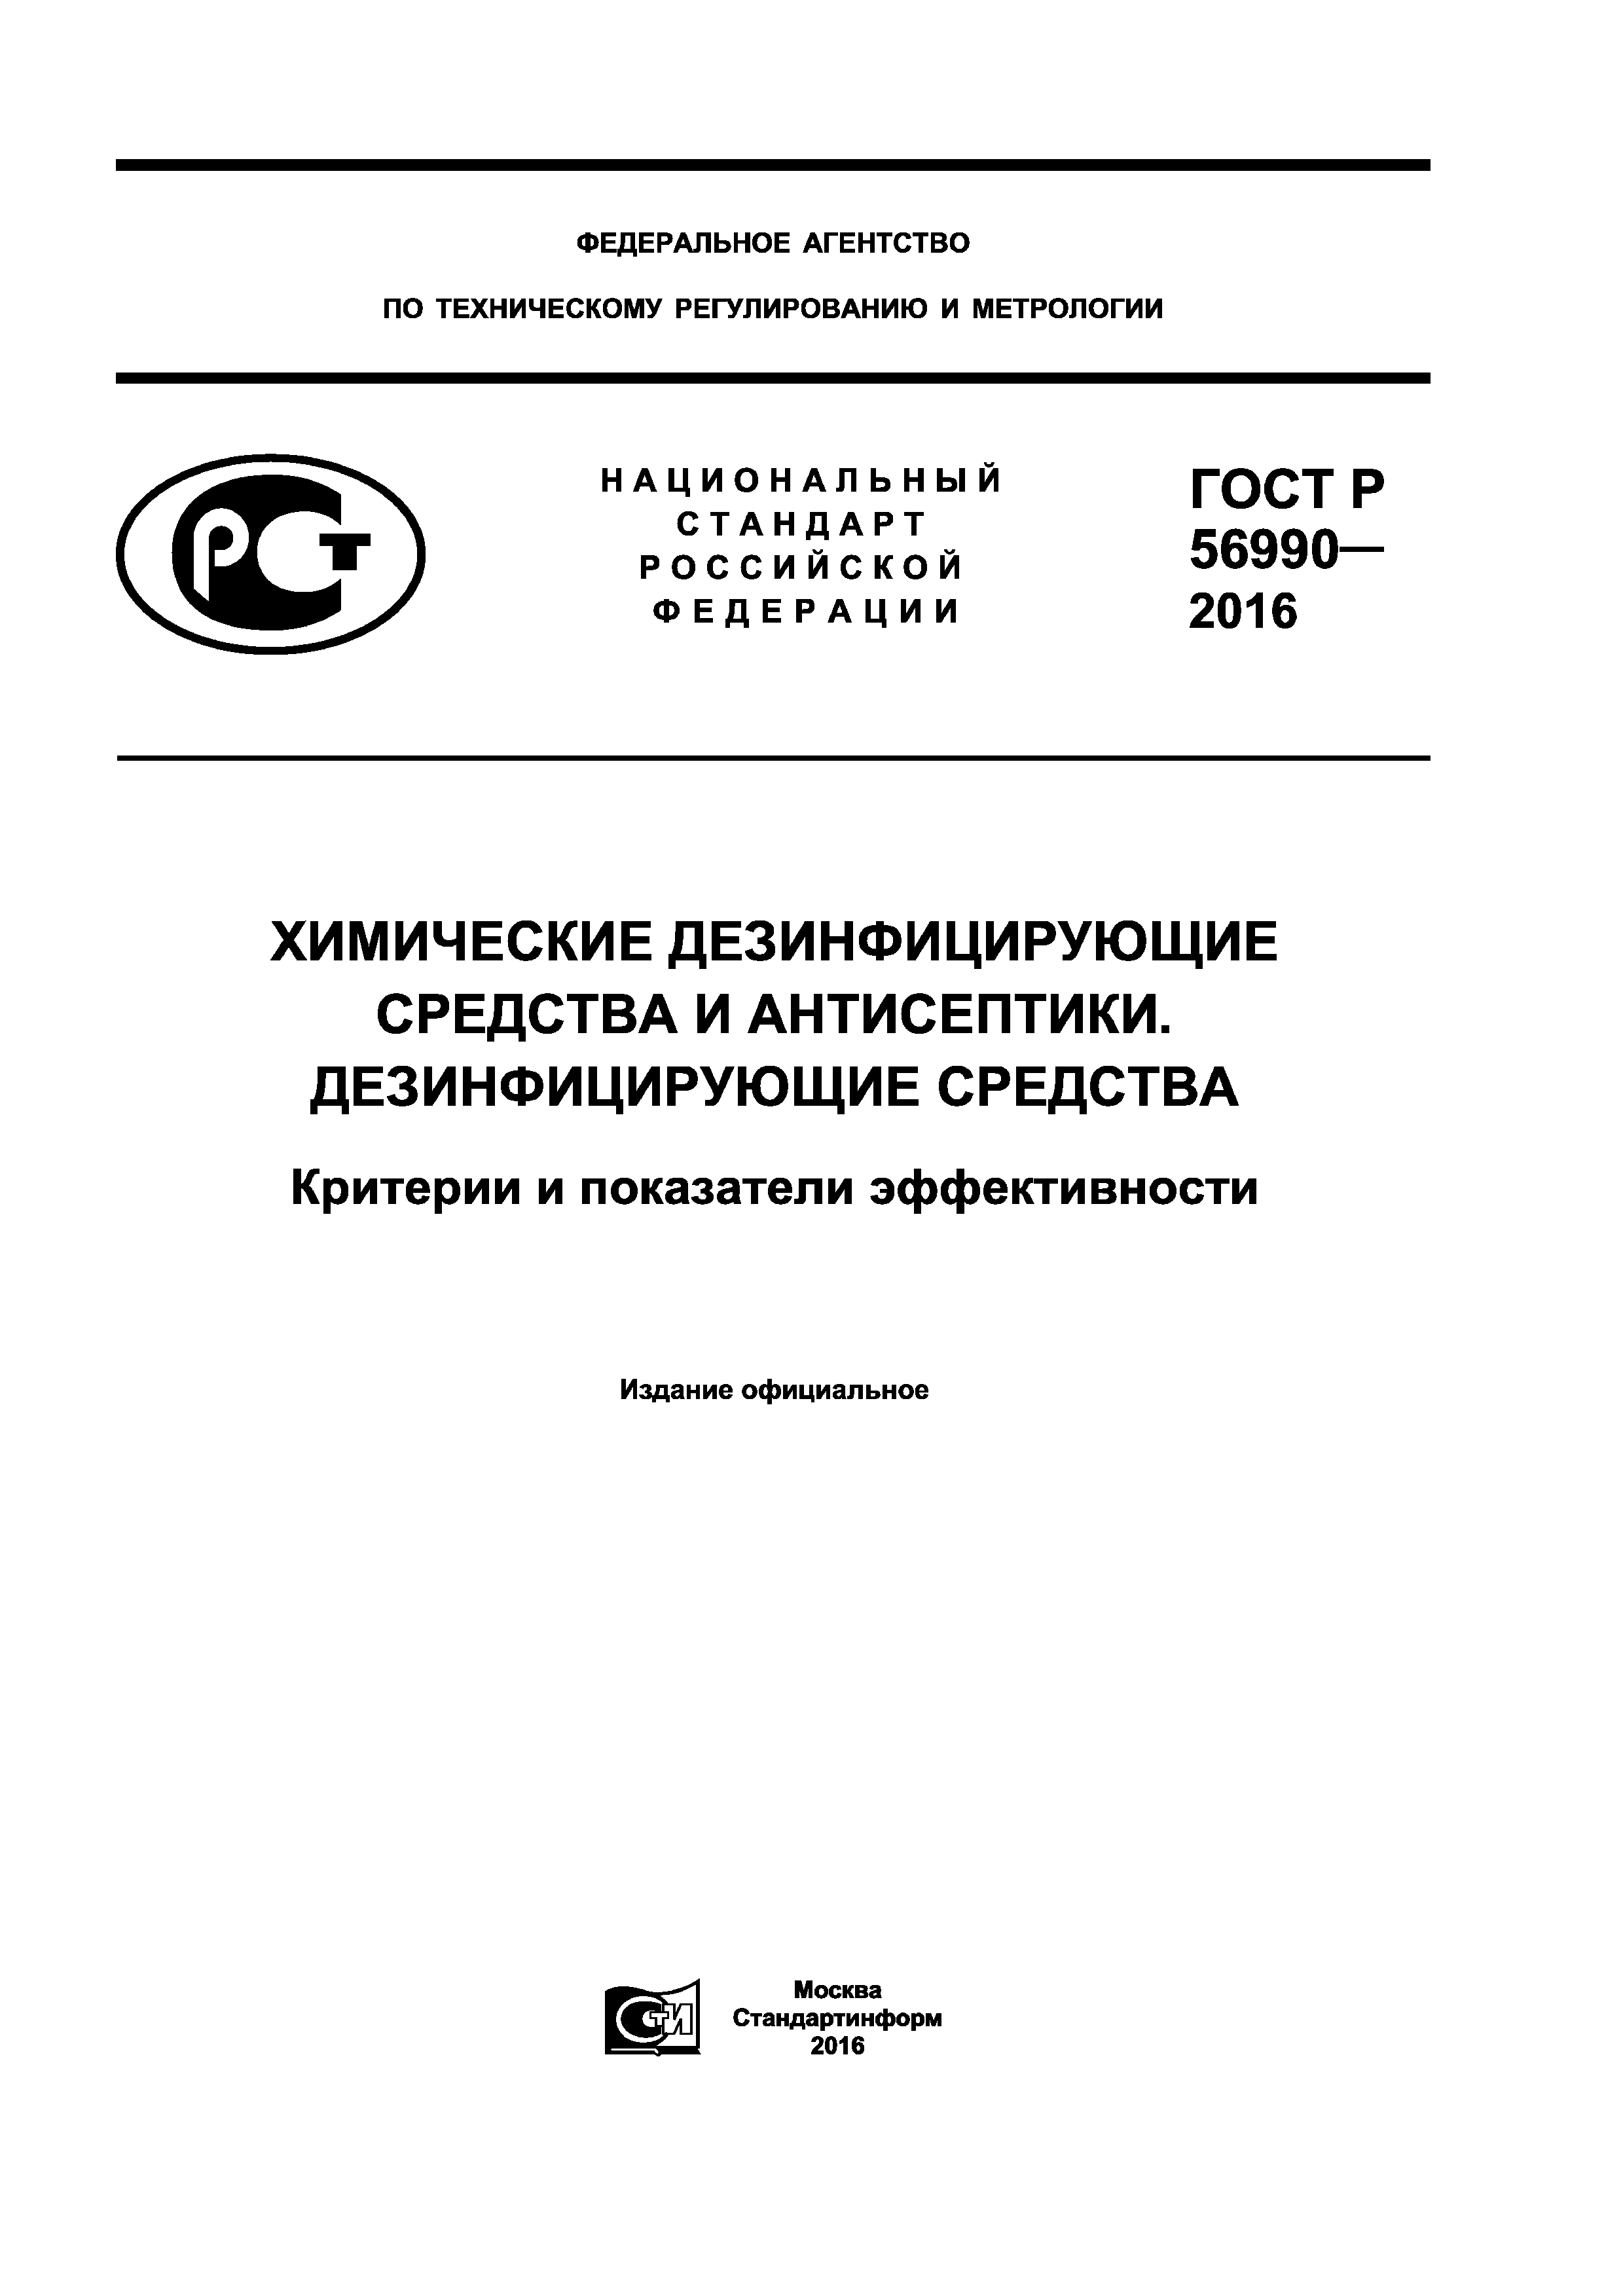 ГОСТ Р 56990-2016